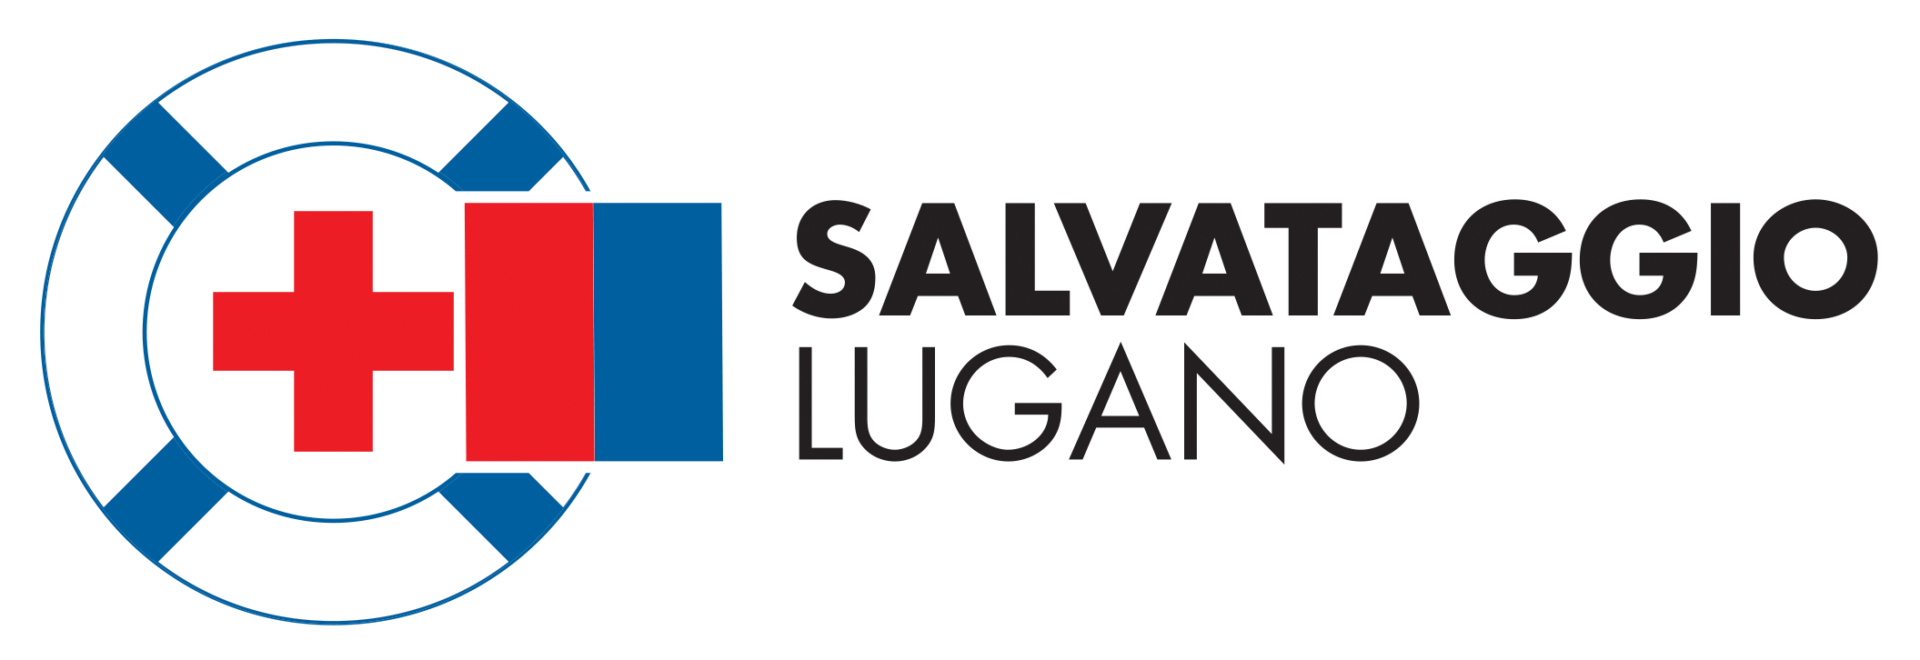 Salvatagio Lugano (SSSL)